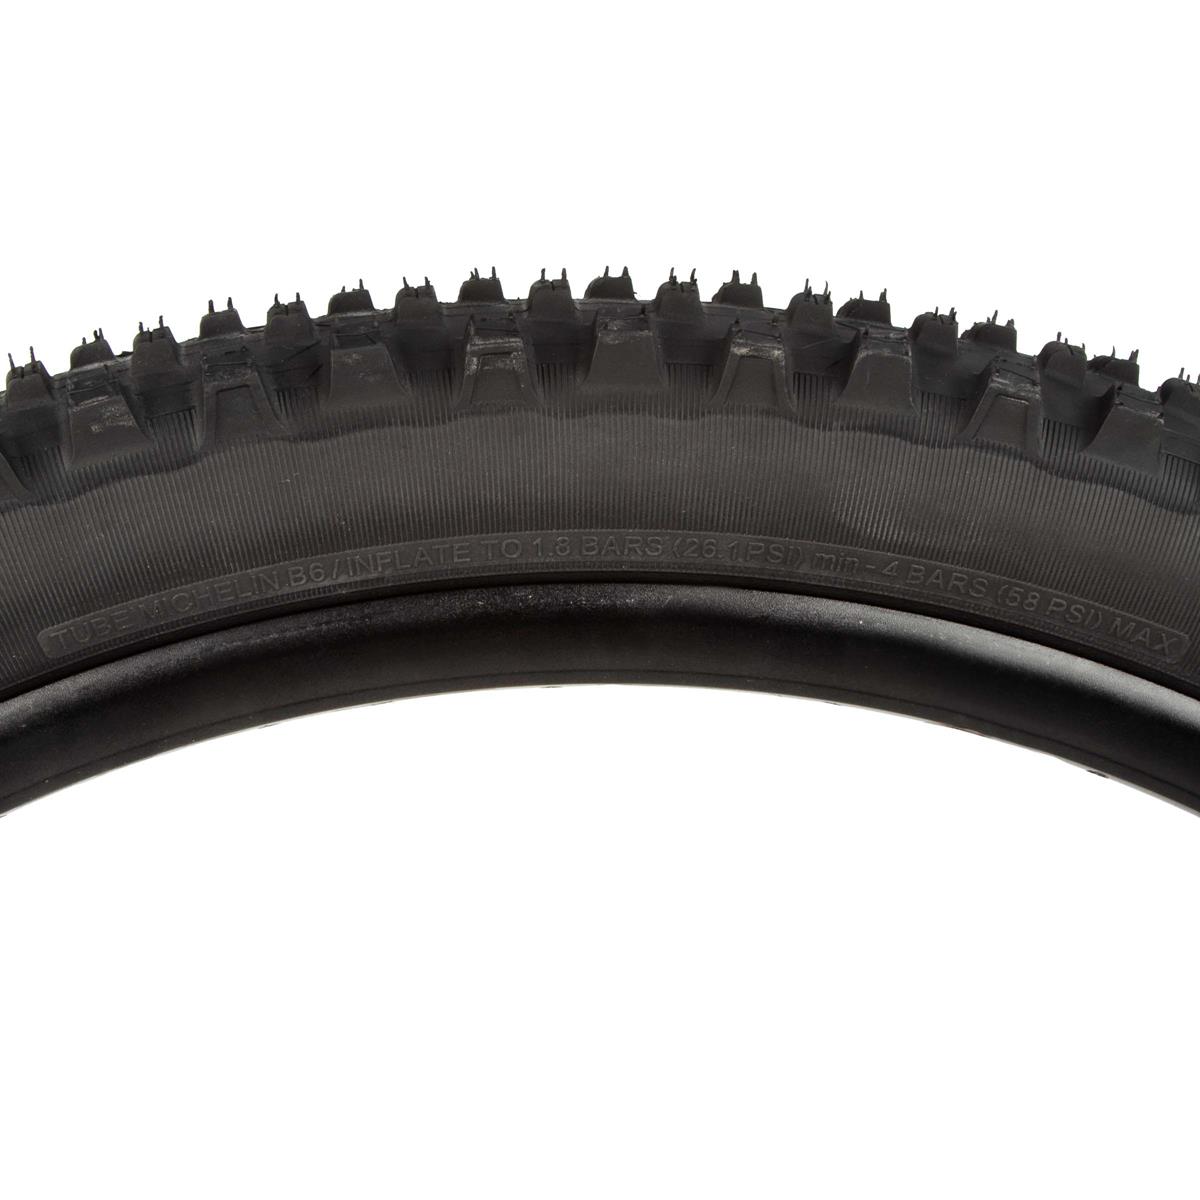 Profex 60066 Mountain Bike Tyre 26 x 1.95 Inches Black